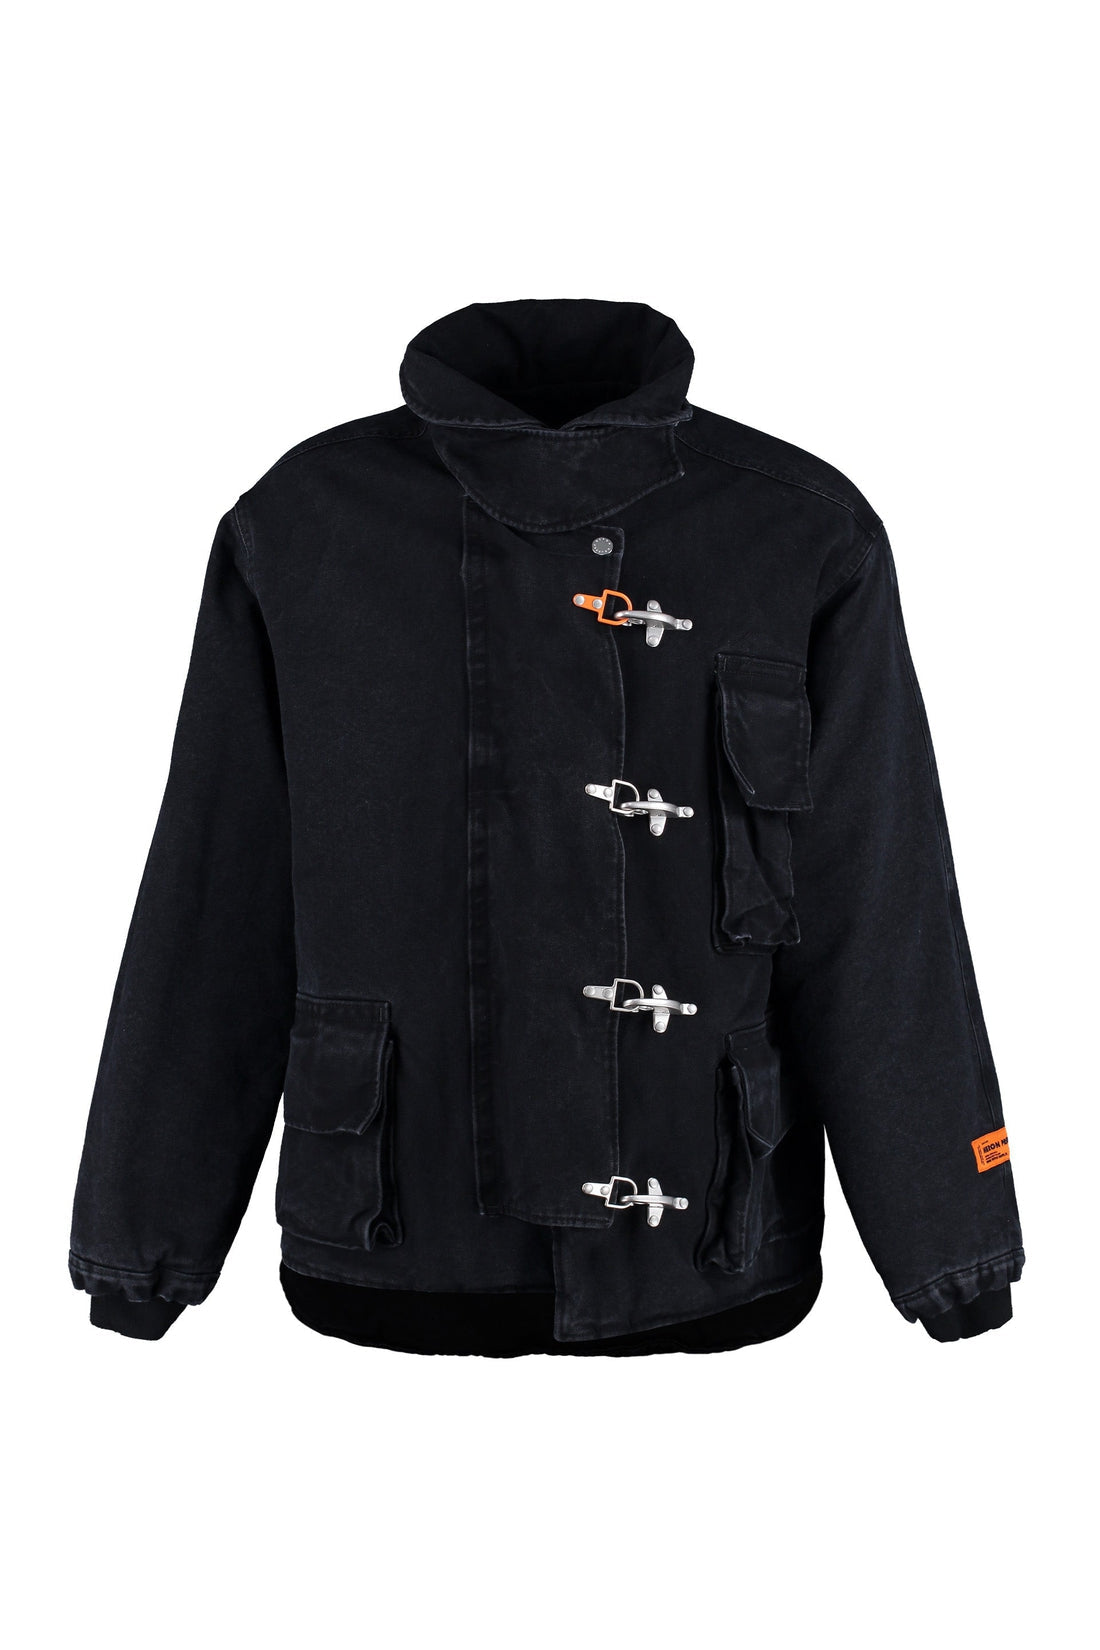 Heron Preston-OUTLET-SALE-Multi-pocket cotton jacket-ARCHIVIST